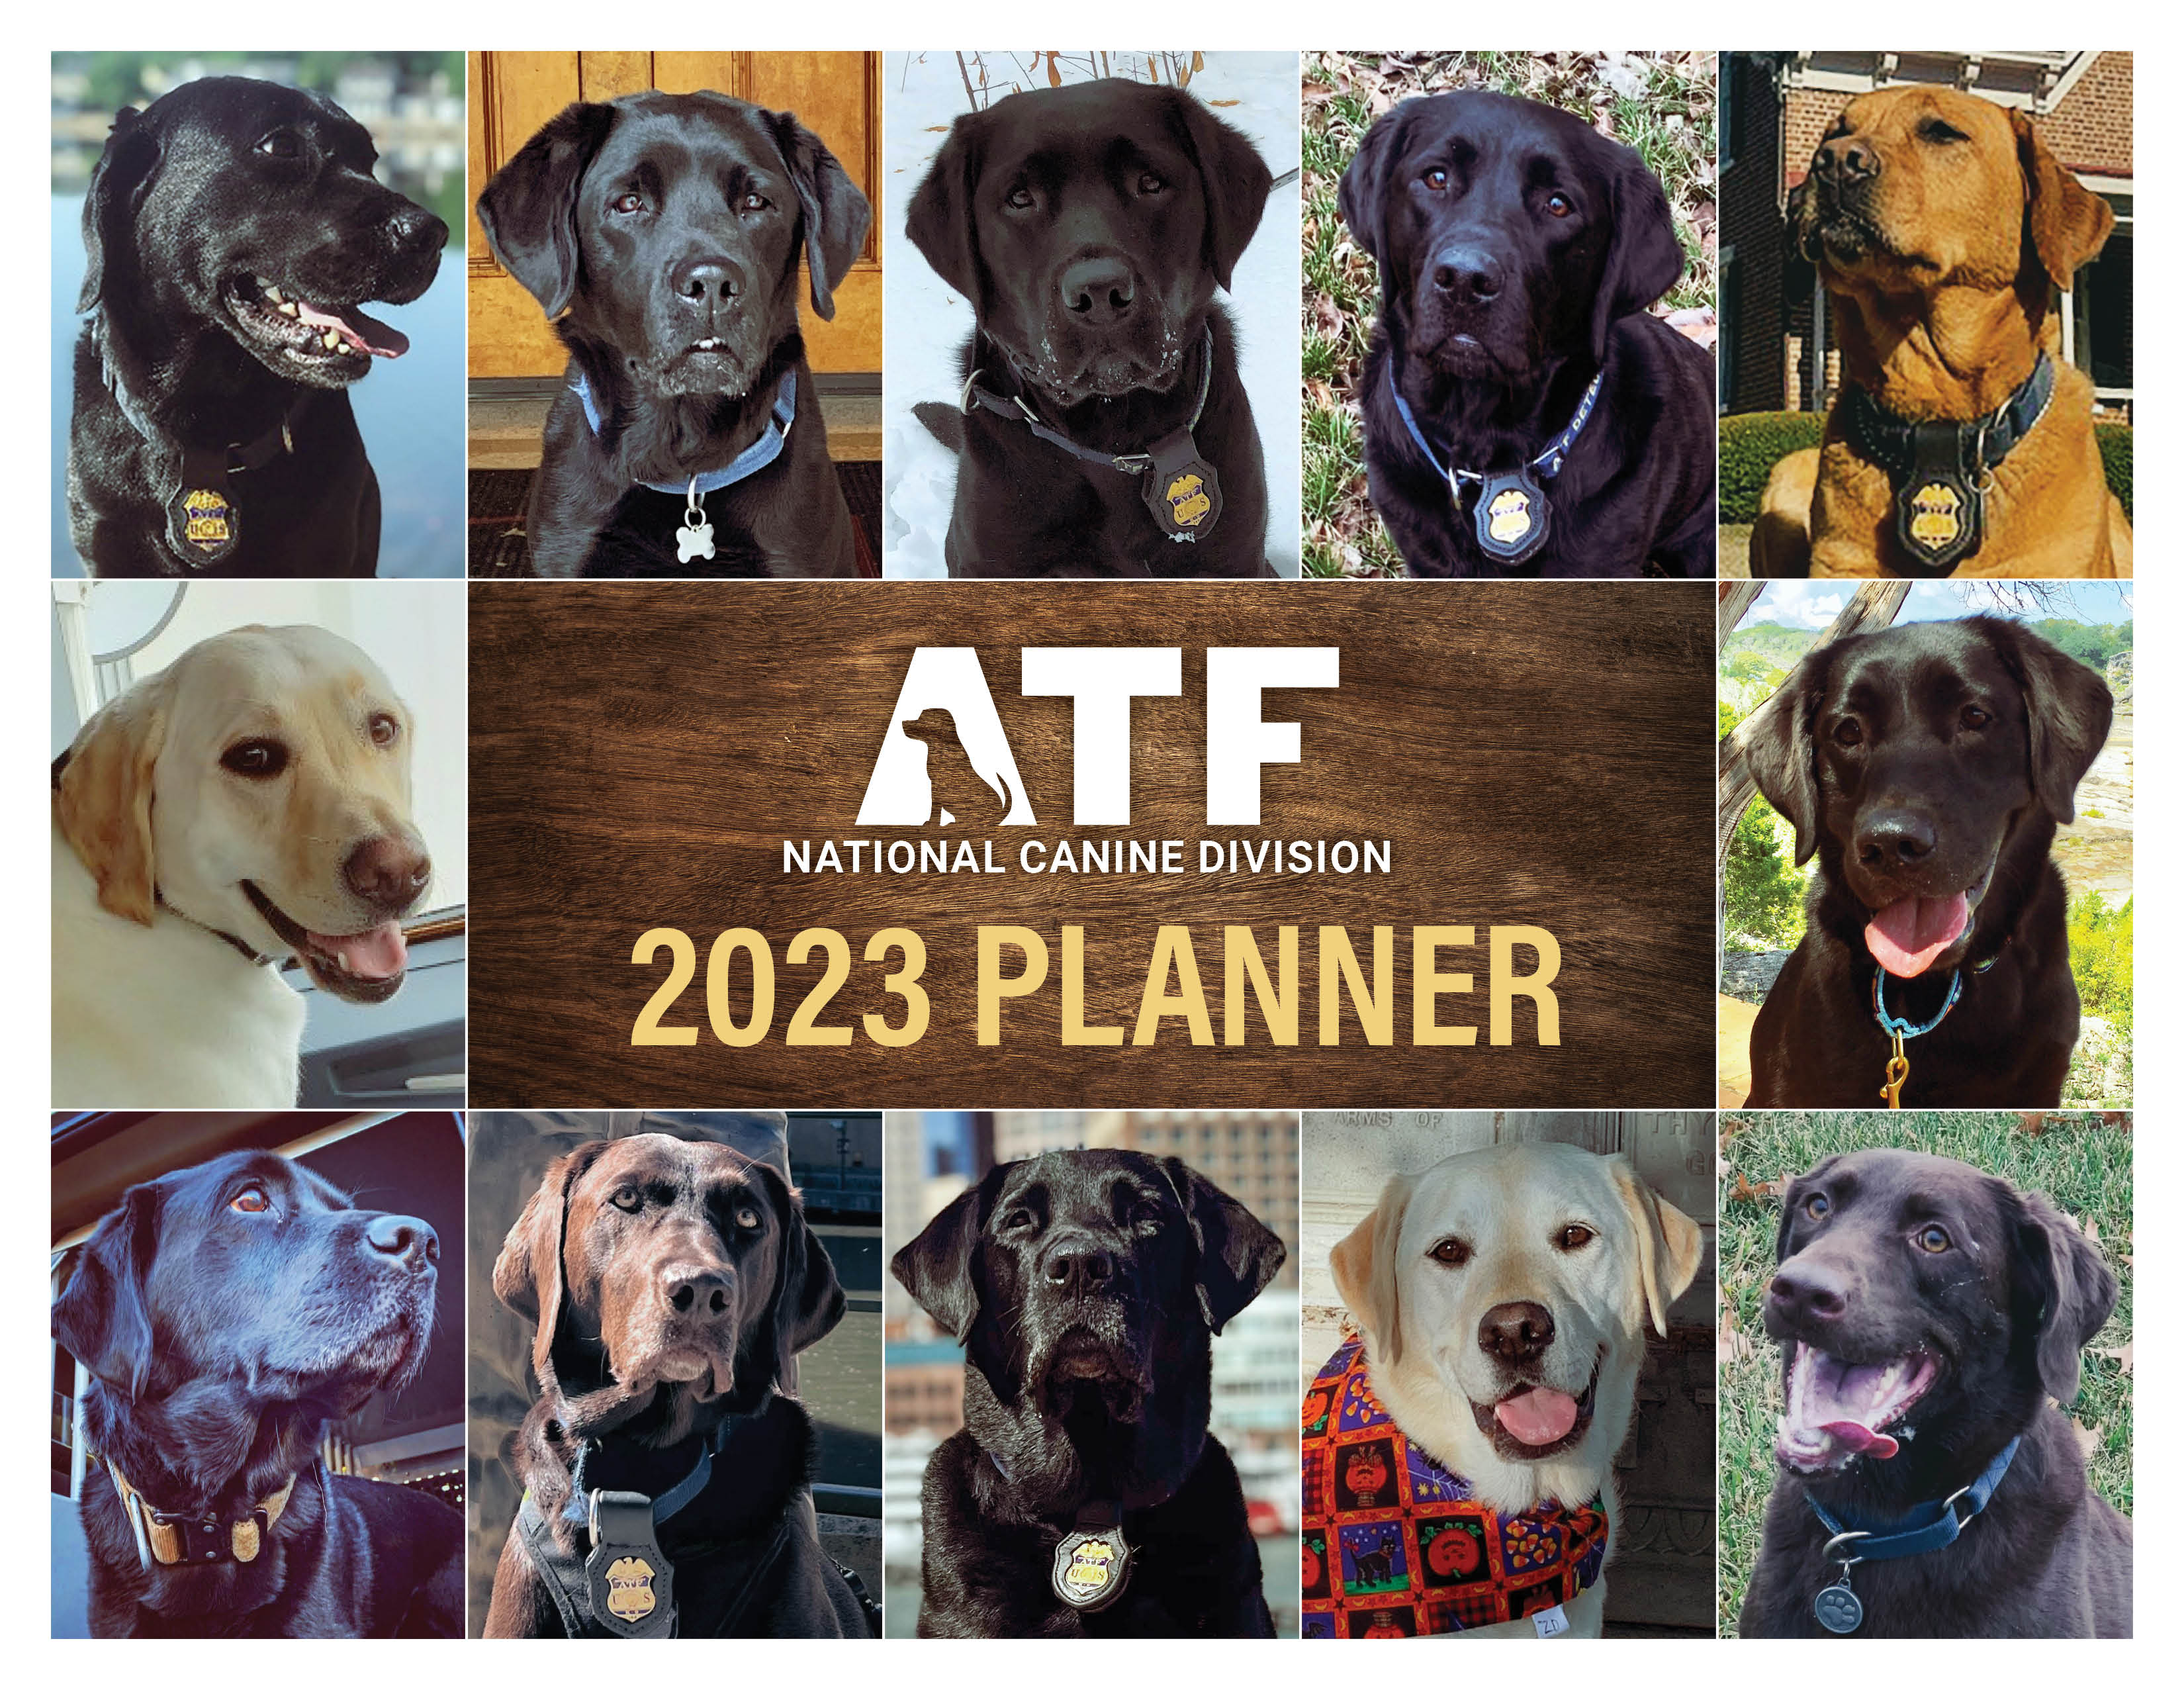 https://www.atf.gov/sites/default/files/media/2022/11/atf-canine-planner-cover-2023-hires.jpg